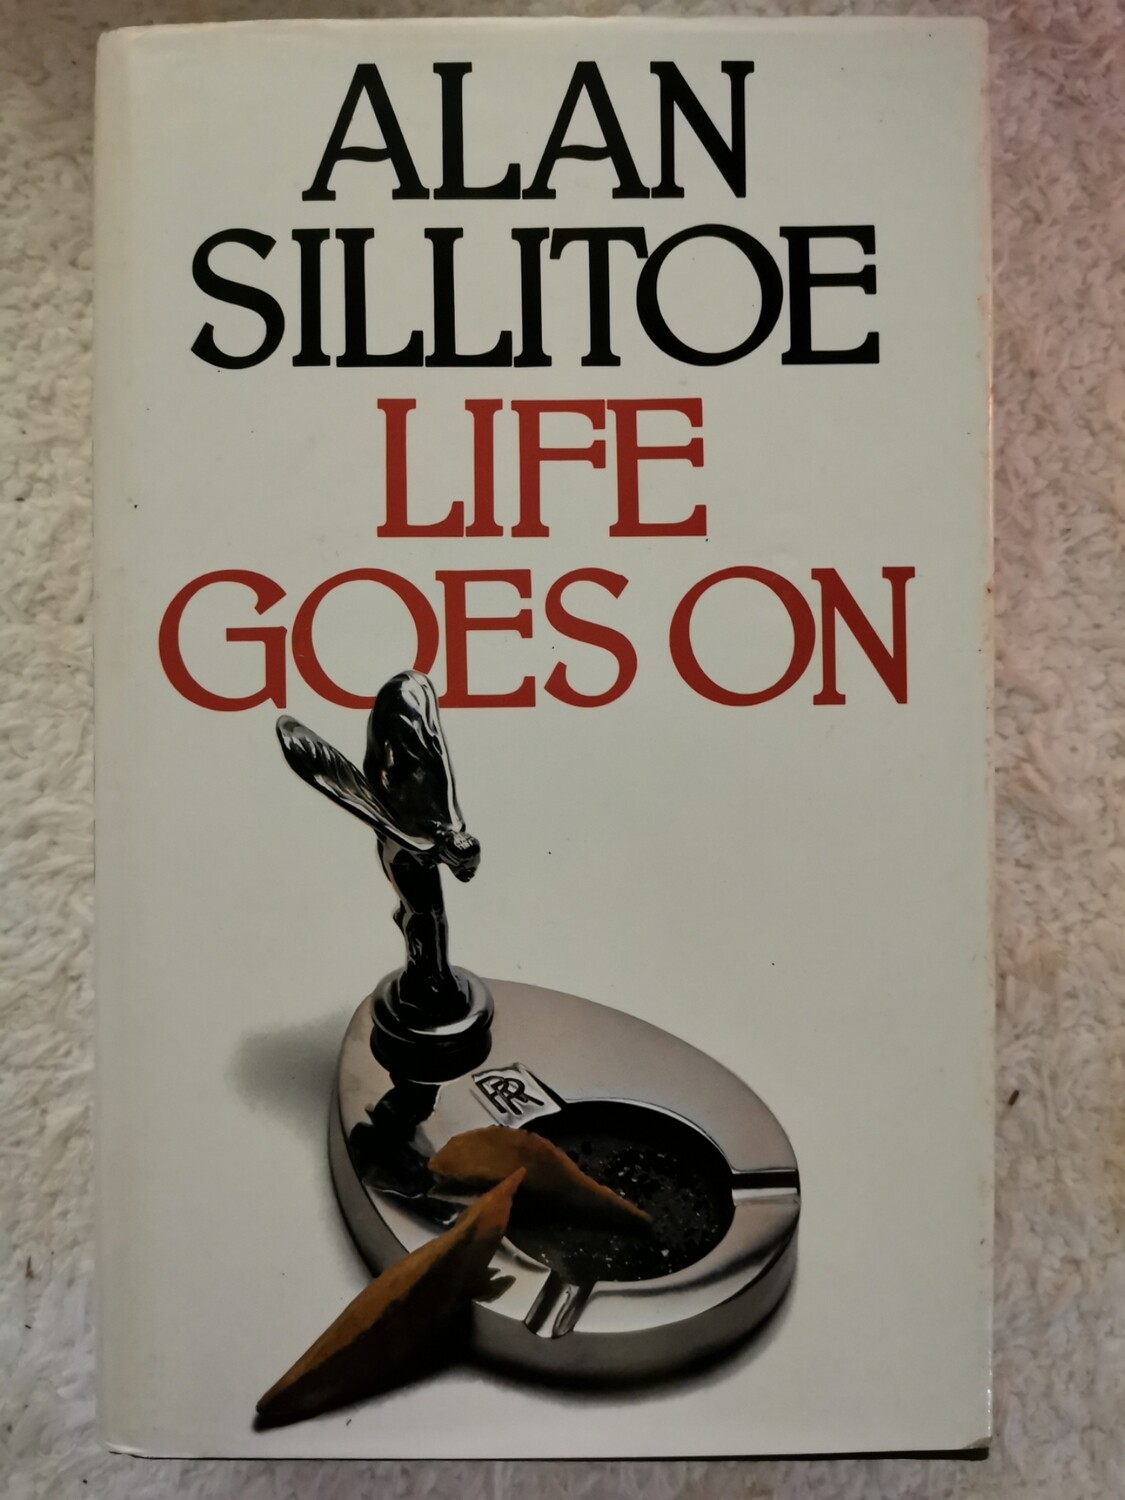 Life goes on, Alan Sillitoe